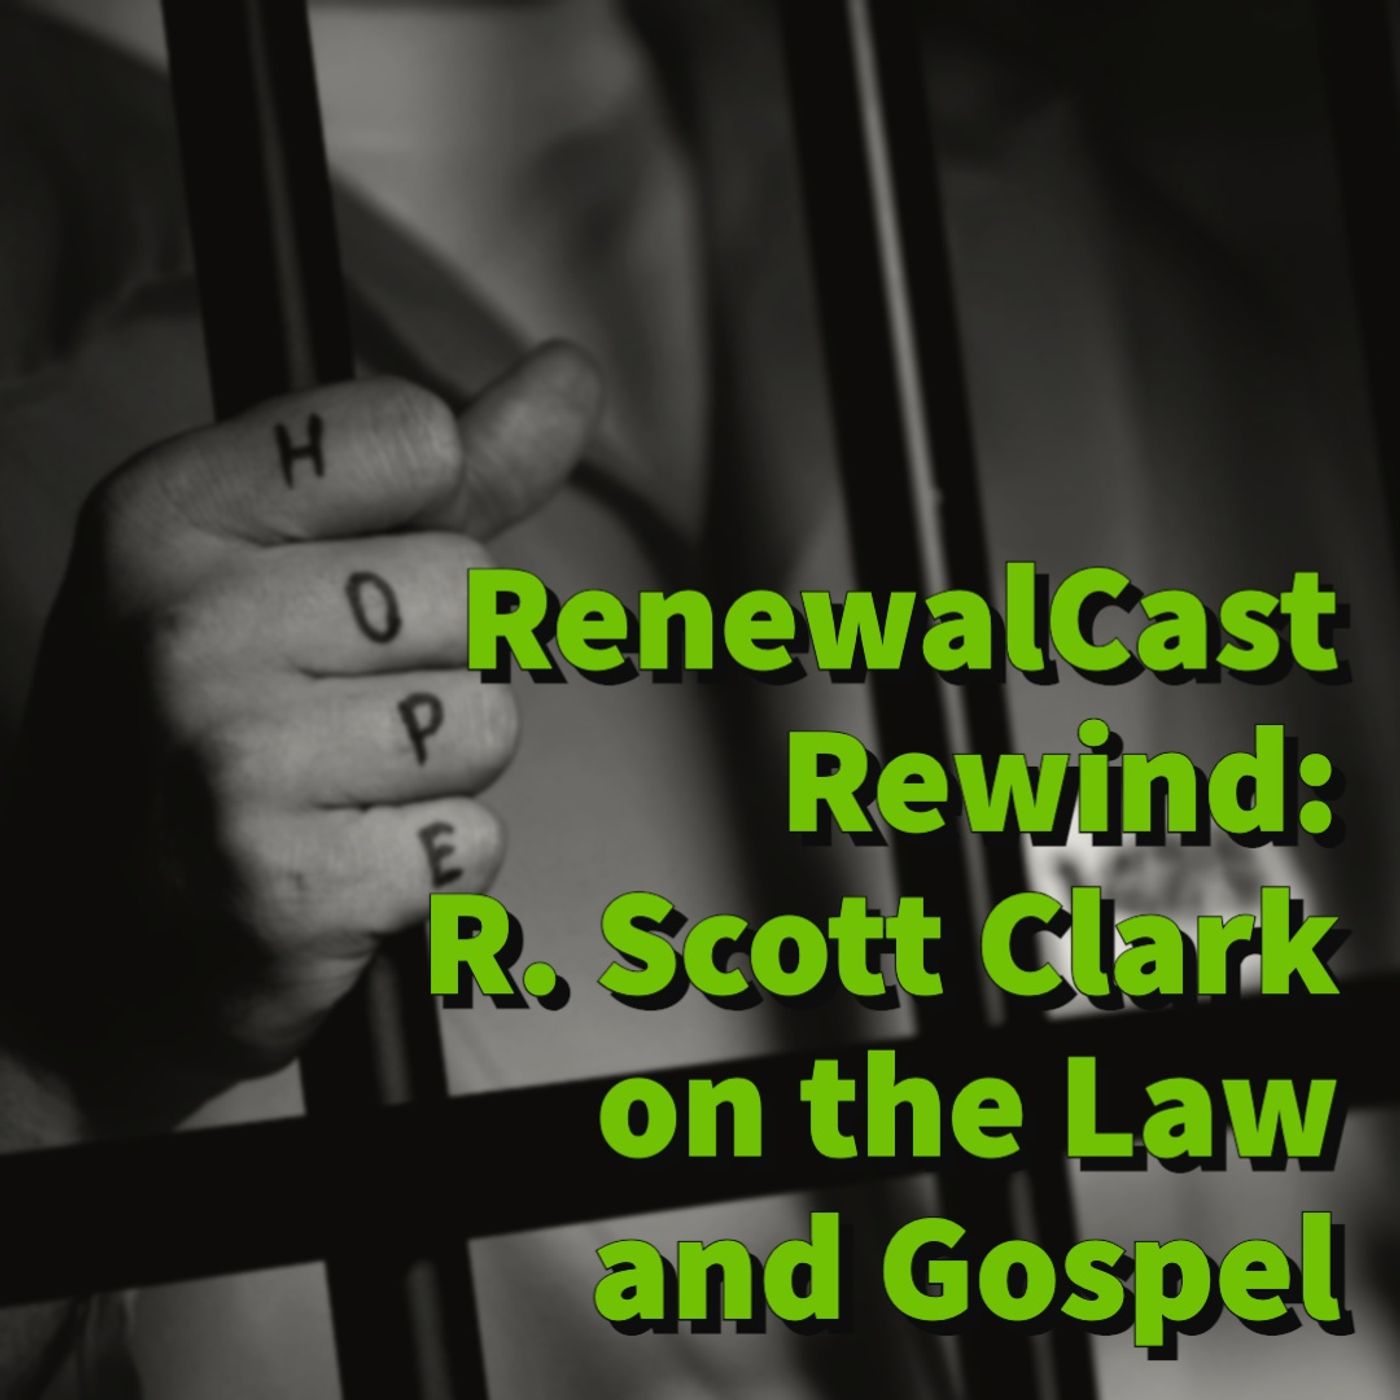 RenewalCast Rewind: R. Scott Clark on the Law and Gospel